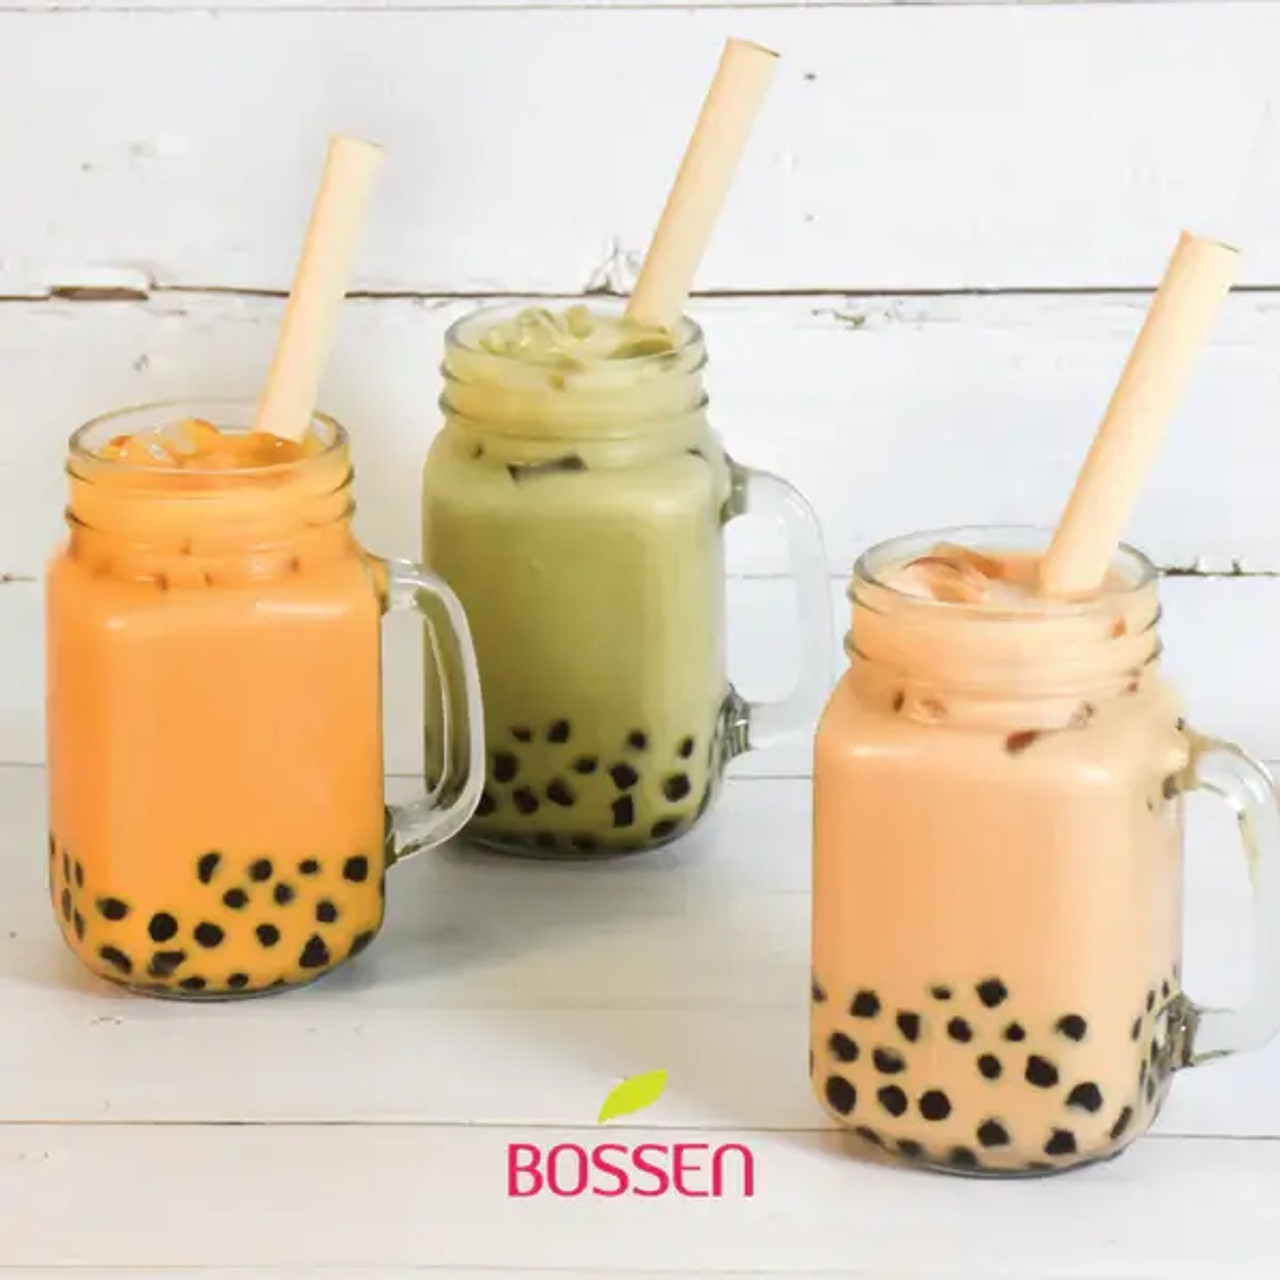 Bossen 2.2 lb. Milk Tea Powder Mix | Full-Bodied Black Tea Flavor(10/Case)-Chicken Pieces